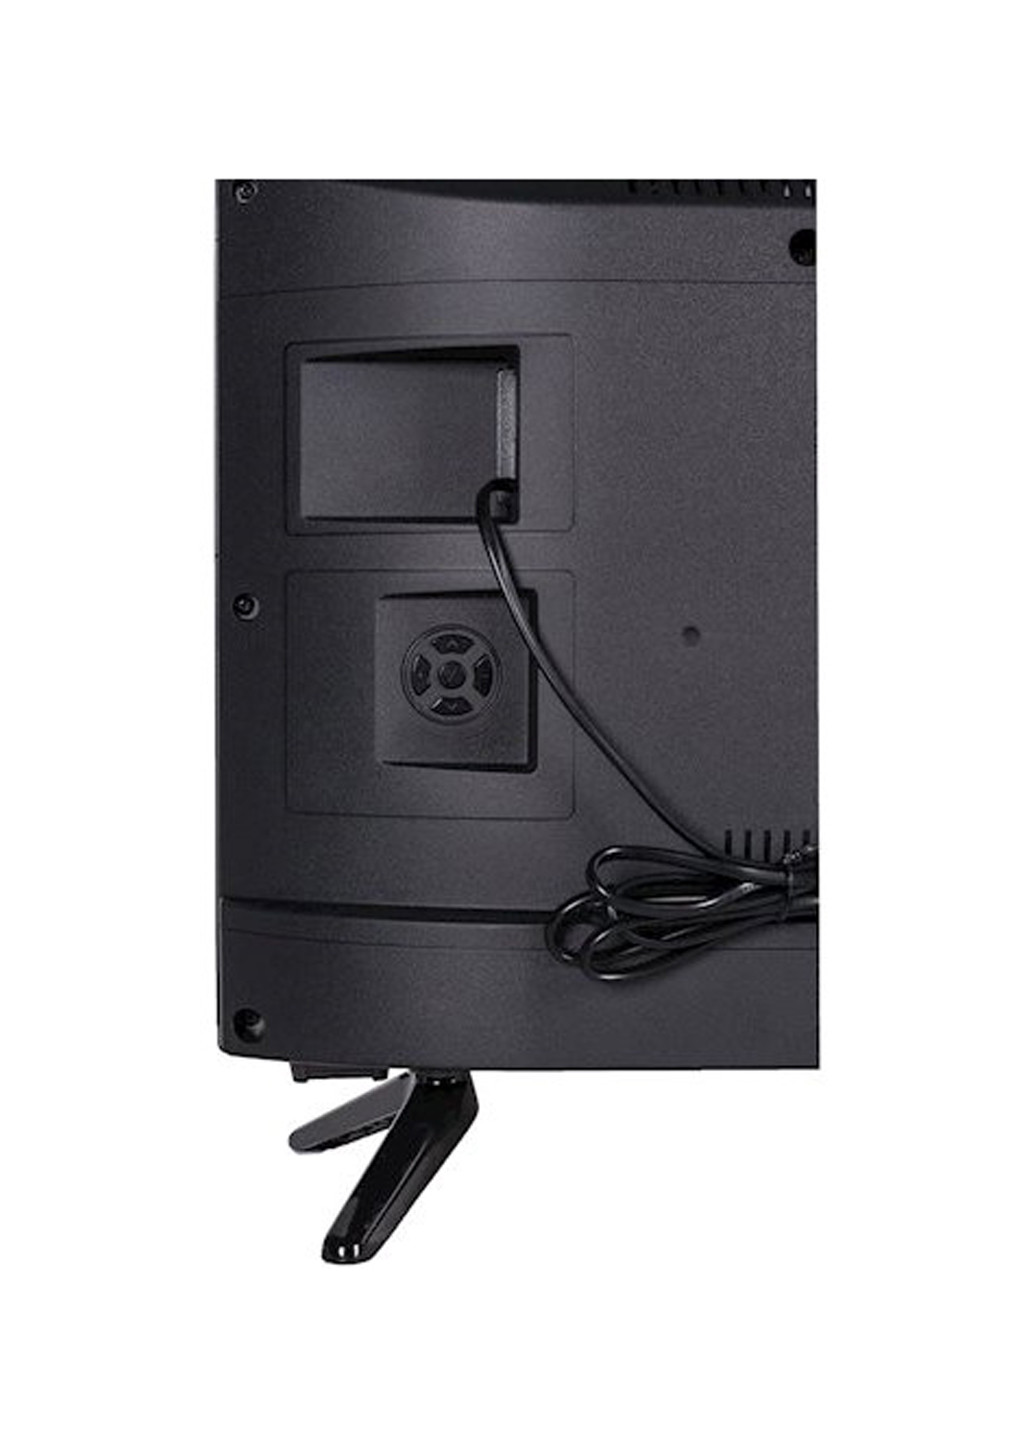 Телевизор Bravis led-43g5000 + t2 black (132568980)